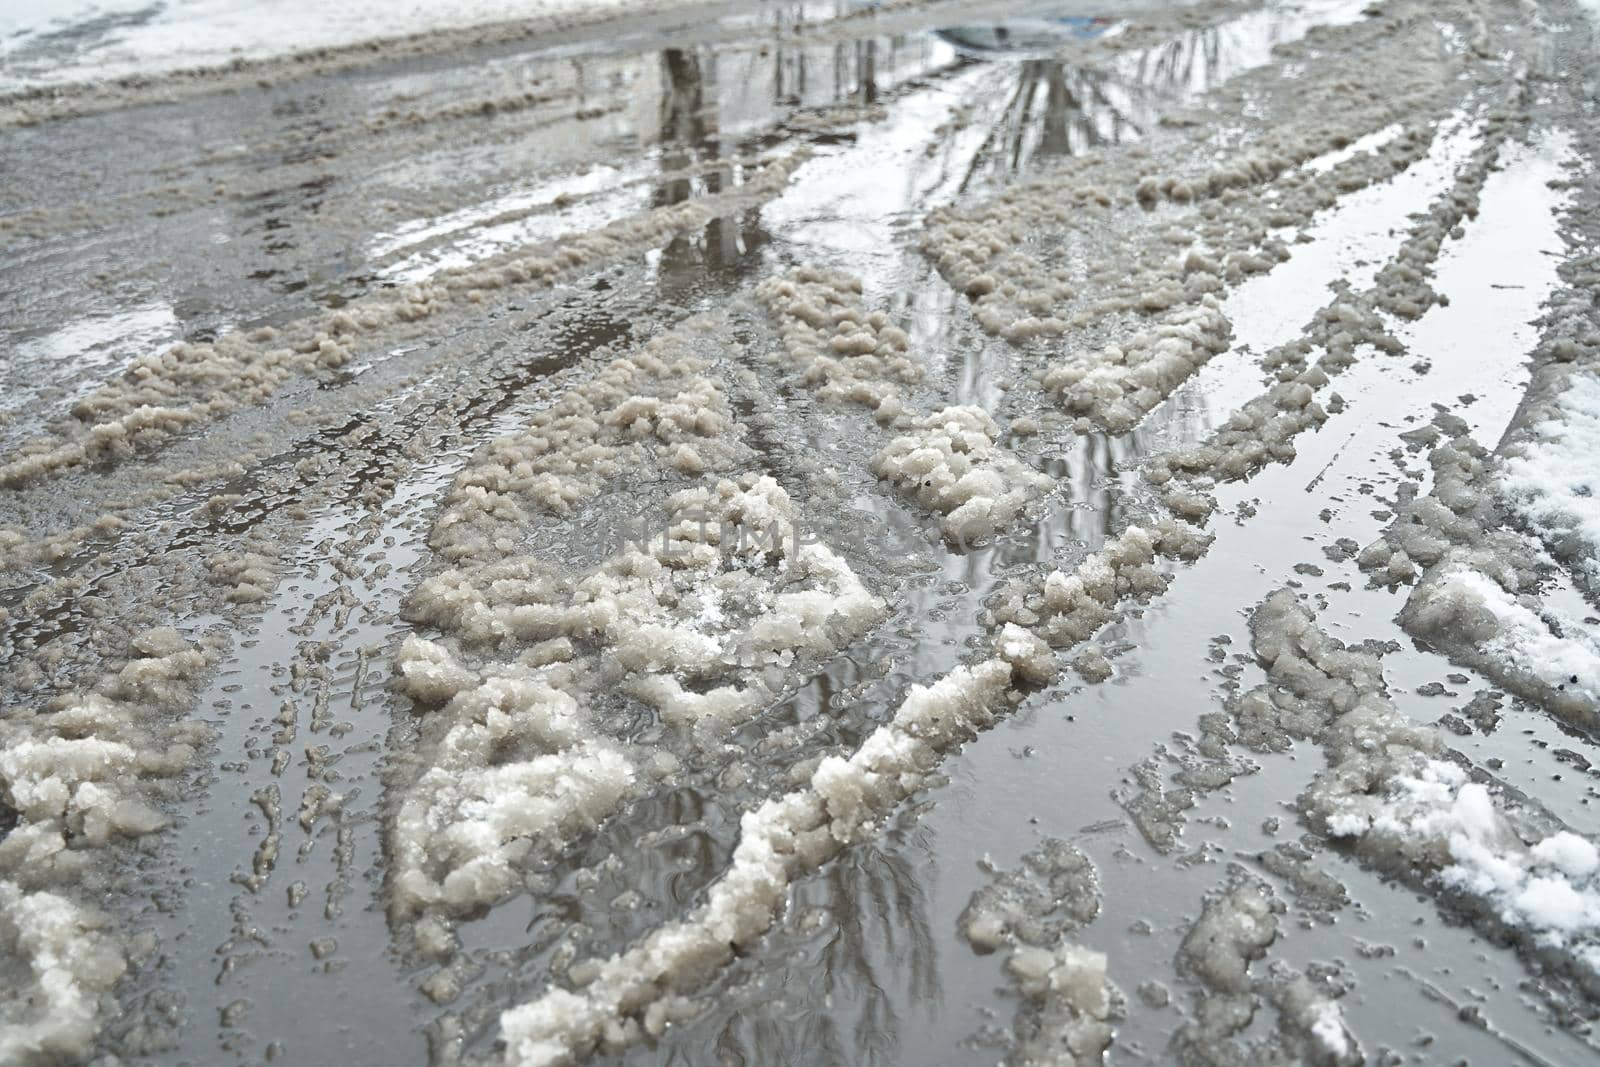 Slush on the road during winter snowfall.